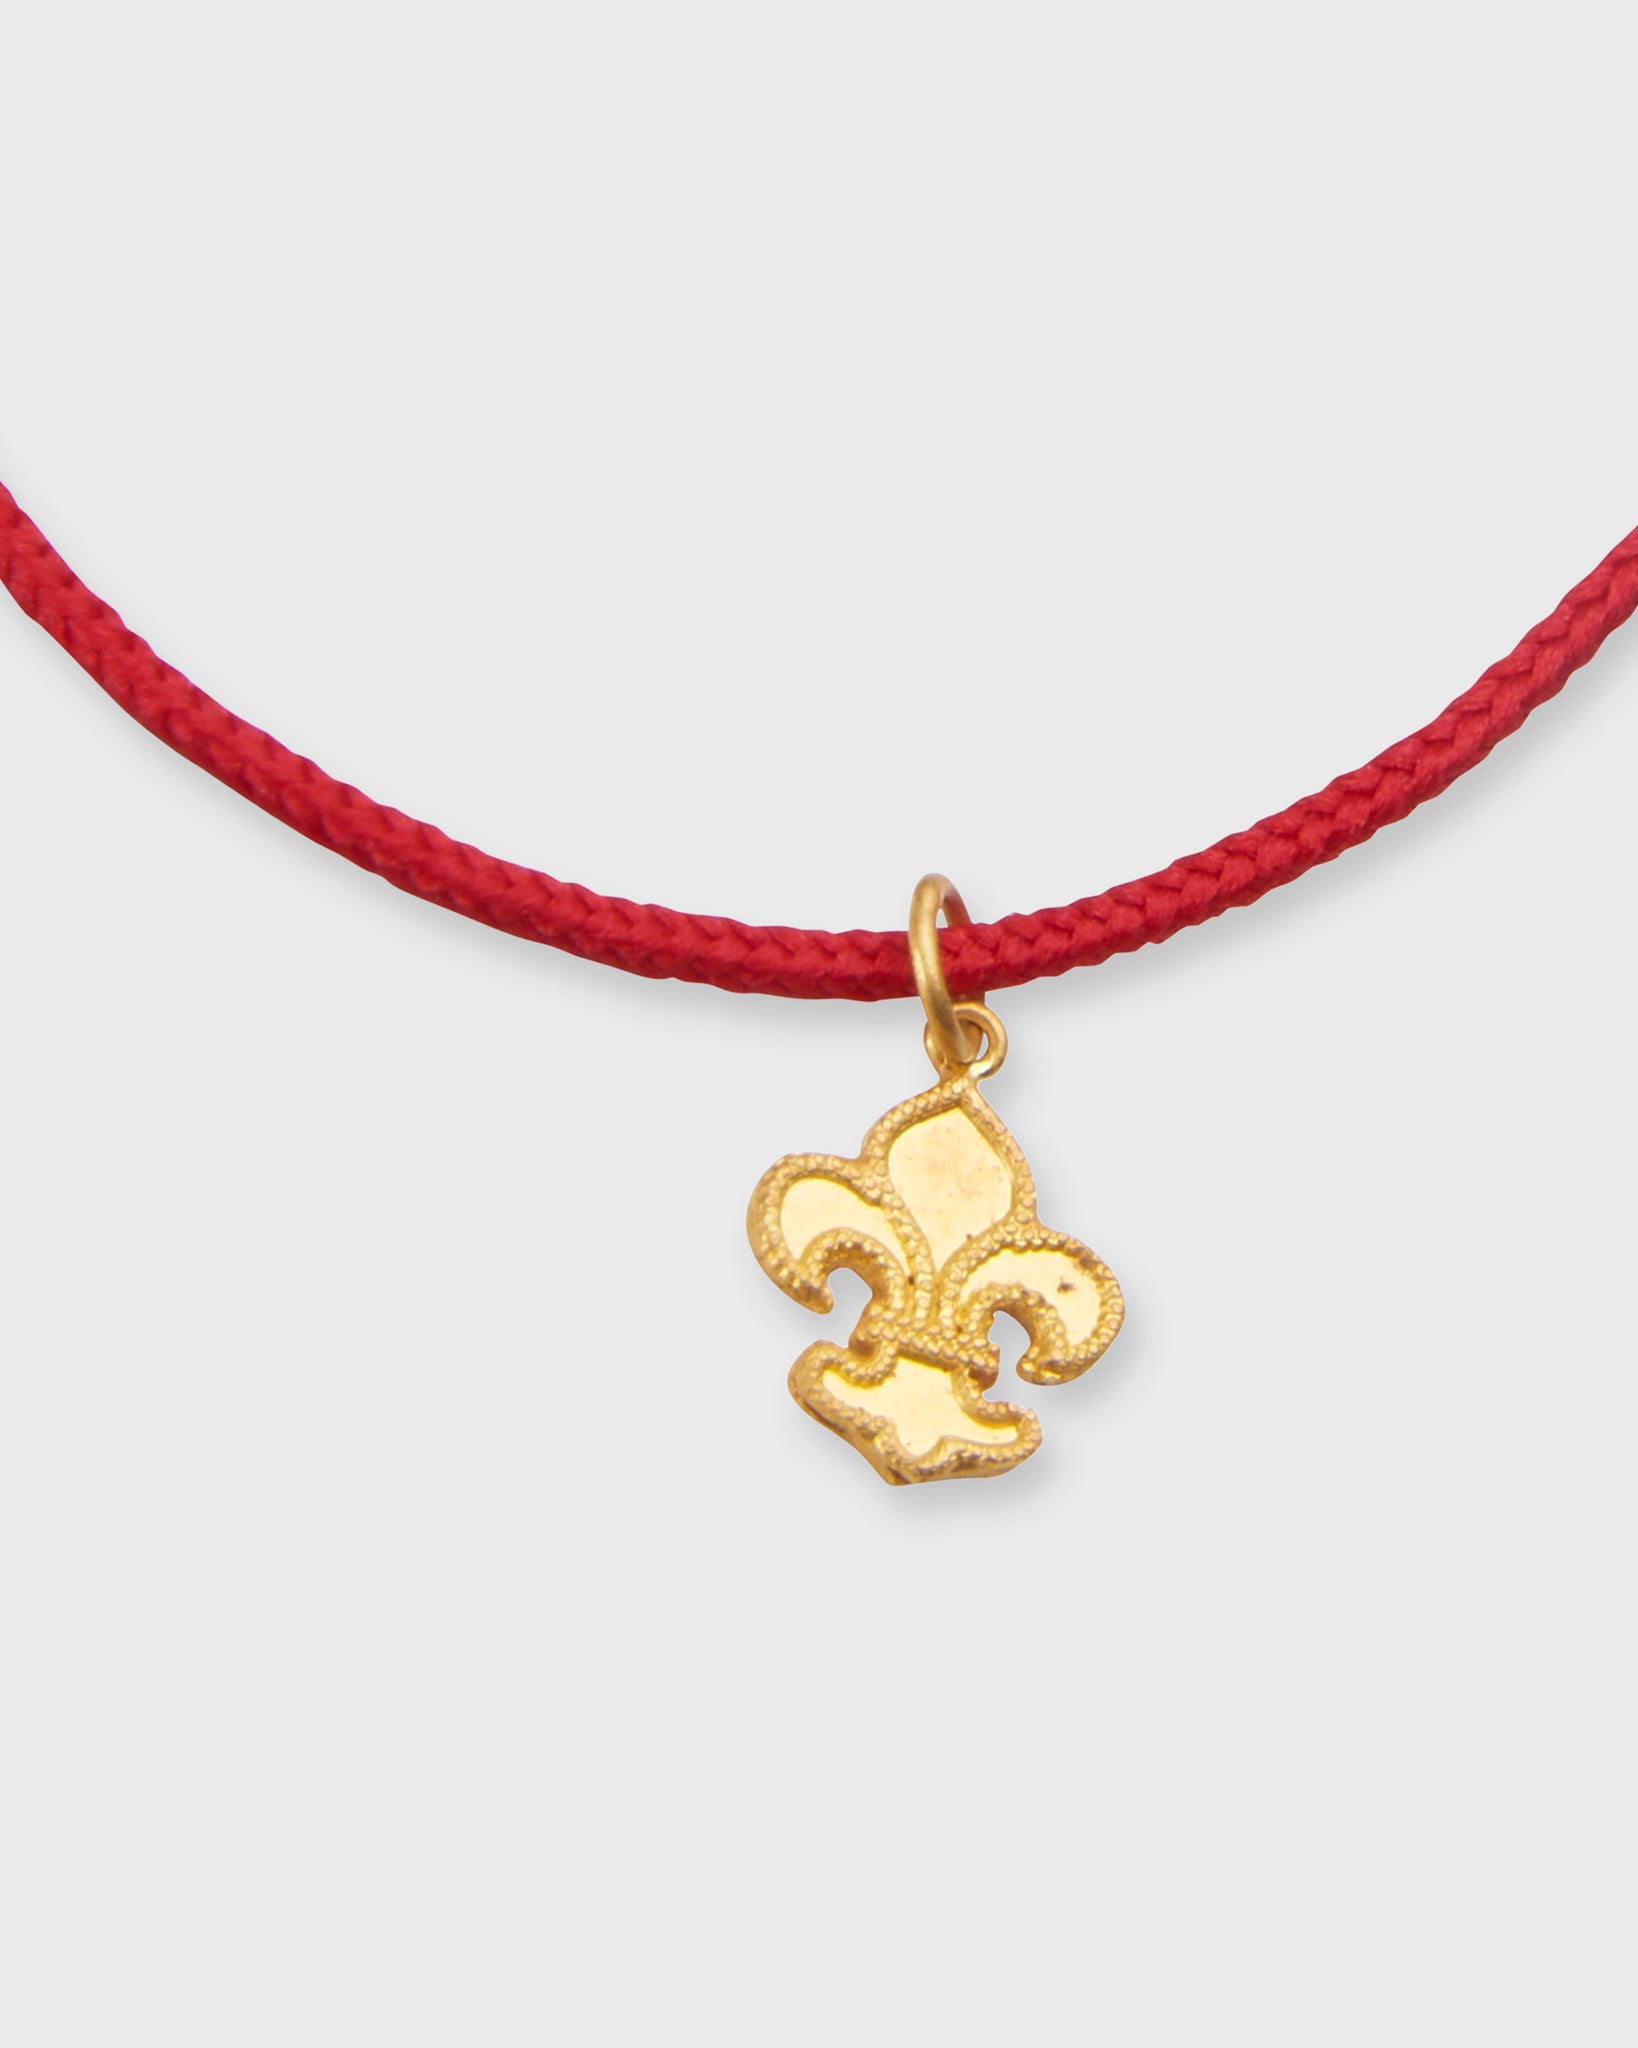 Fleur De Lys Charm Bracelet in Gold/Red Cord